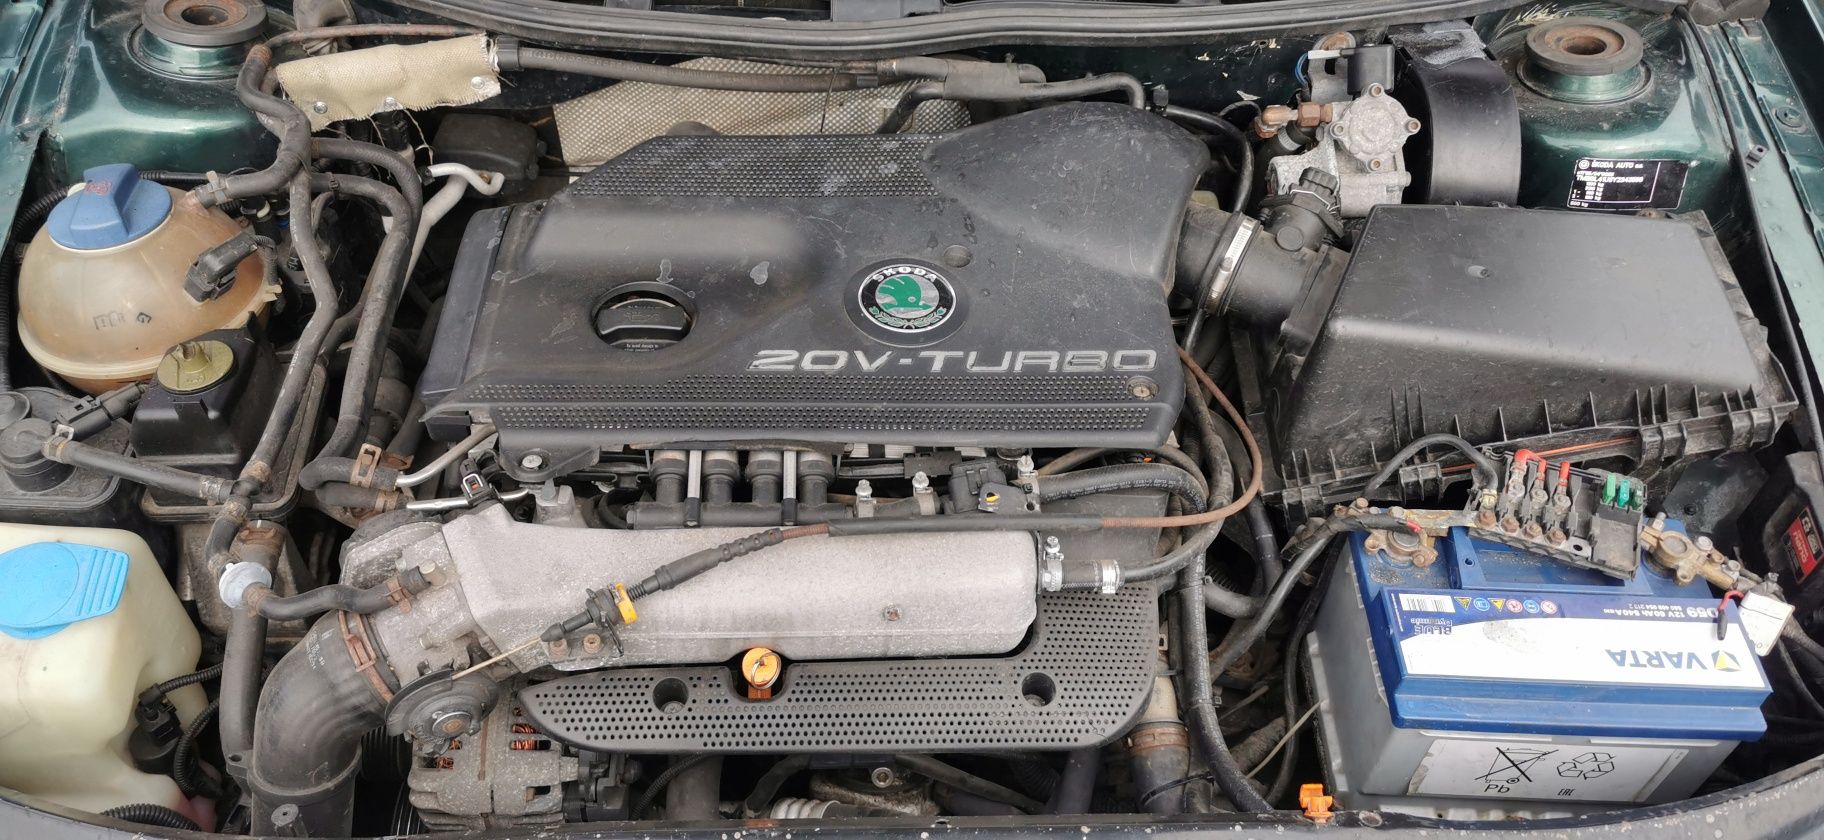 Skoda Octavia 20V turbo